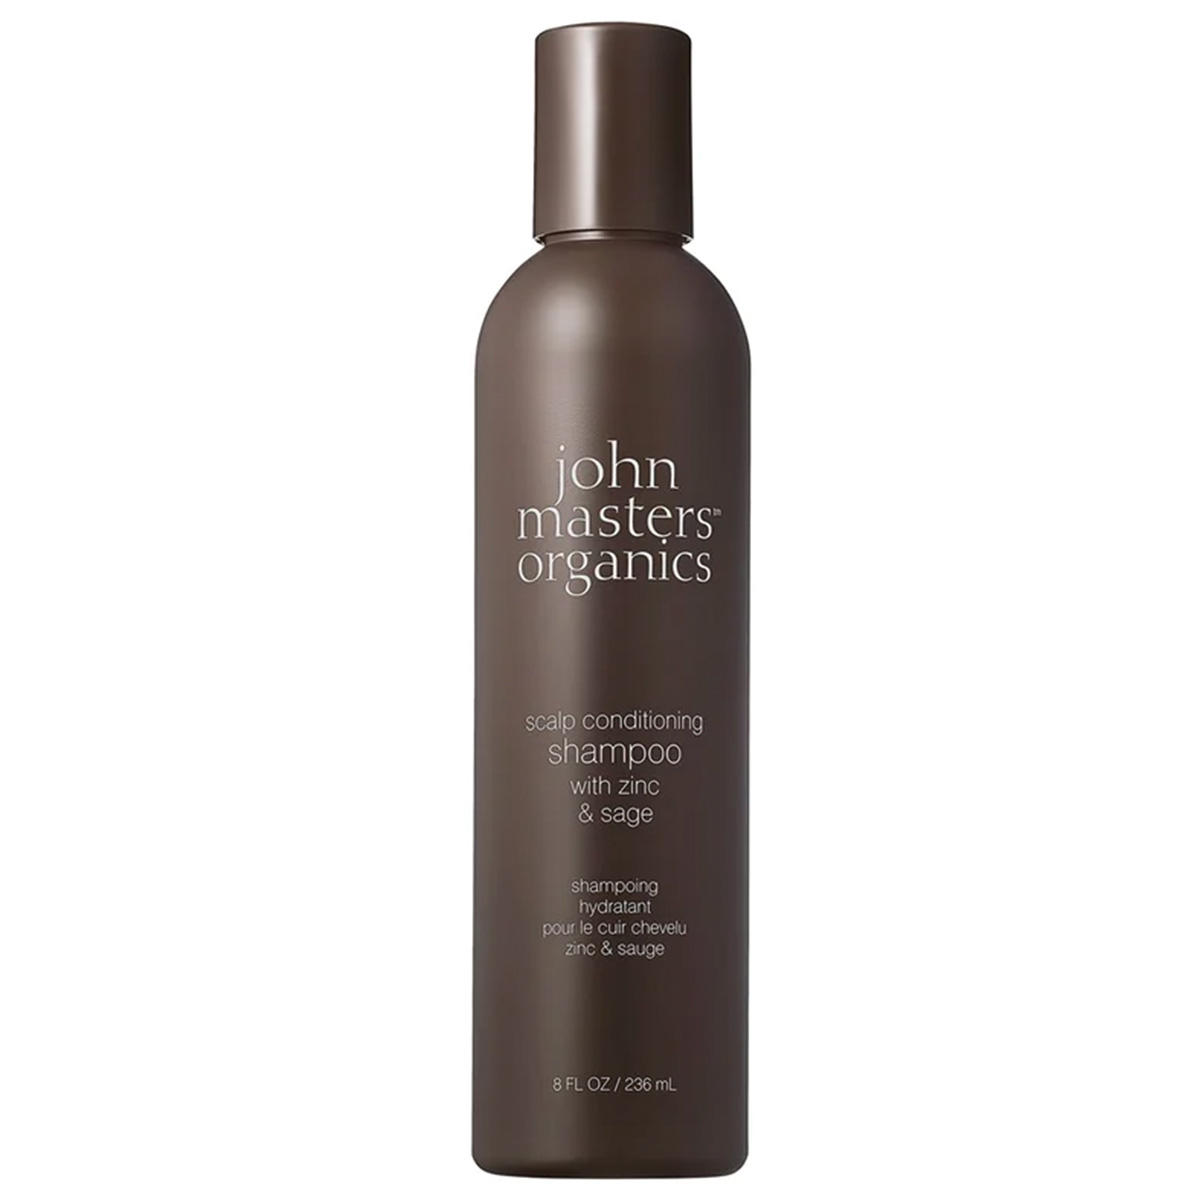 John Masters Organics Scalp Conditioning Shampoo with Zinc & Sage 236 ml - 1